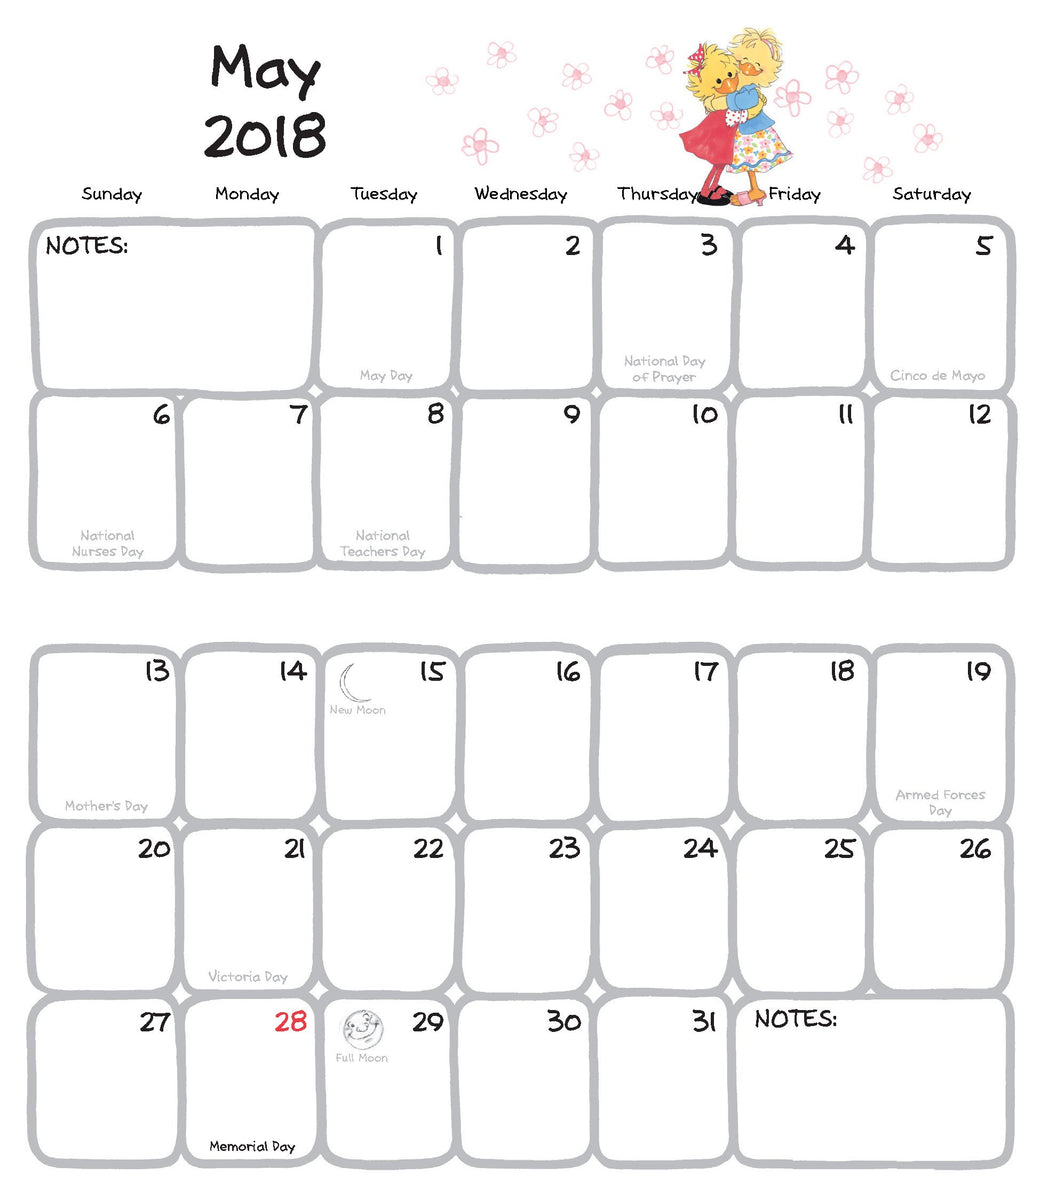 2018 Pocket Calendar by Suzy's Zoo Suzy's Zoo Store